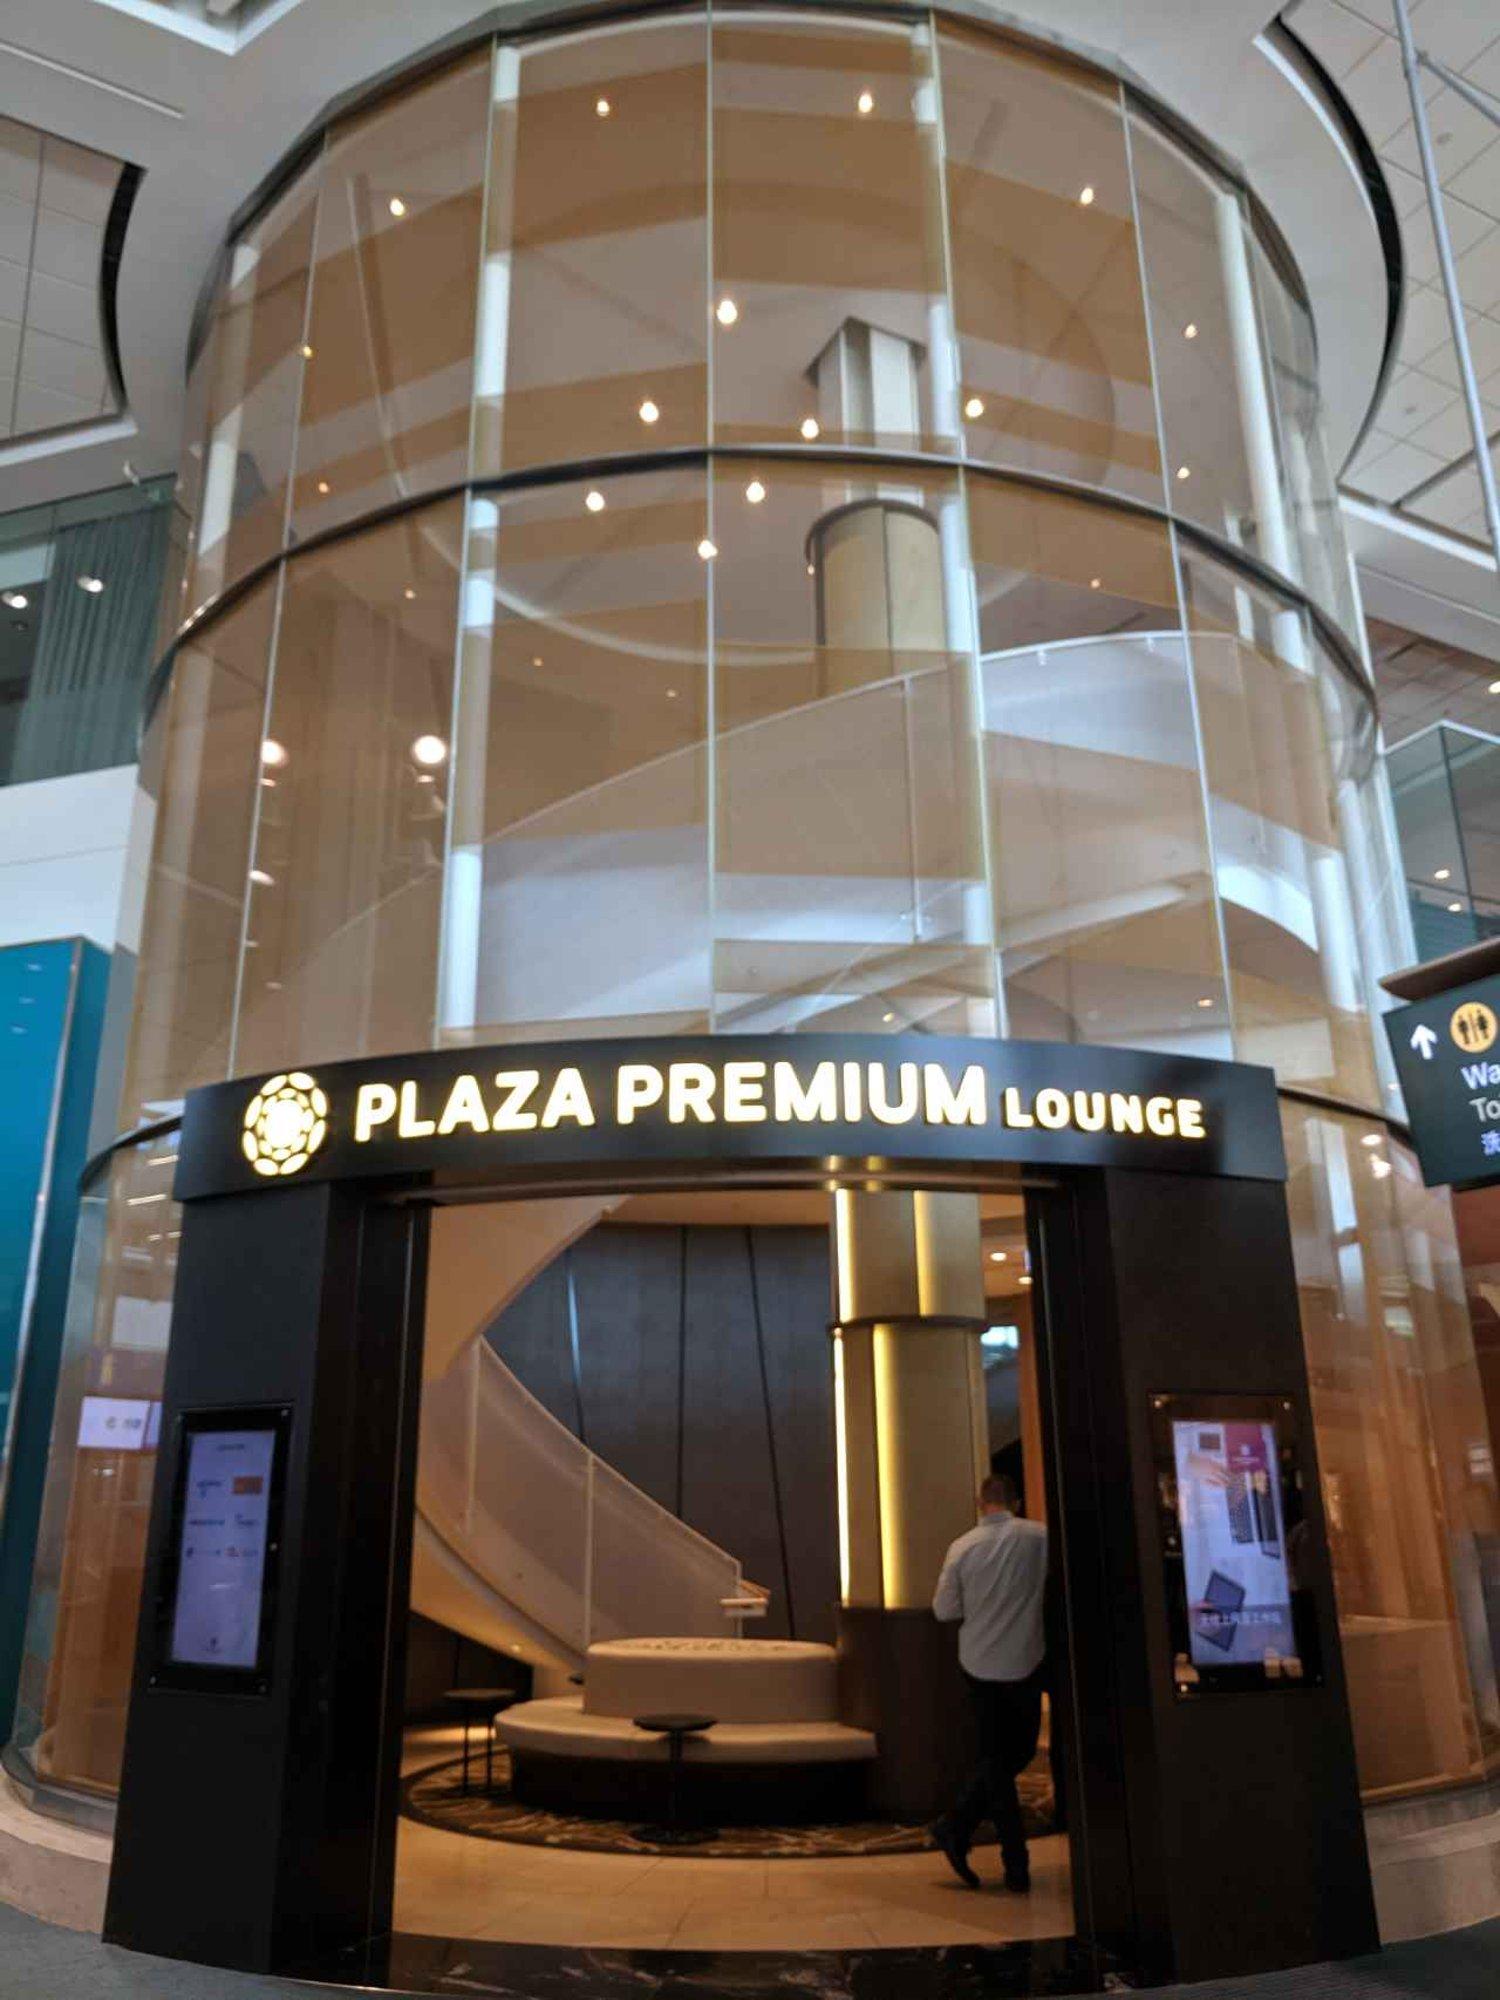 Plaza Premium Lounge (Domestic Gate B15) image 31 of 72